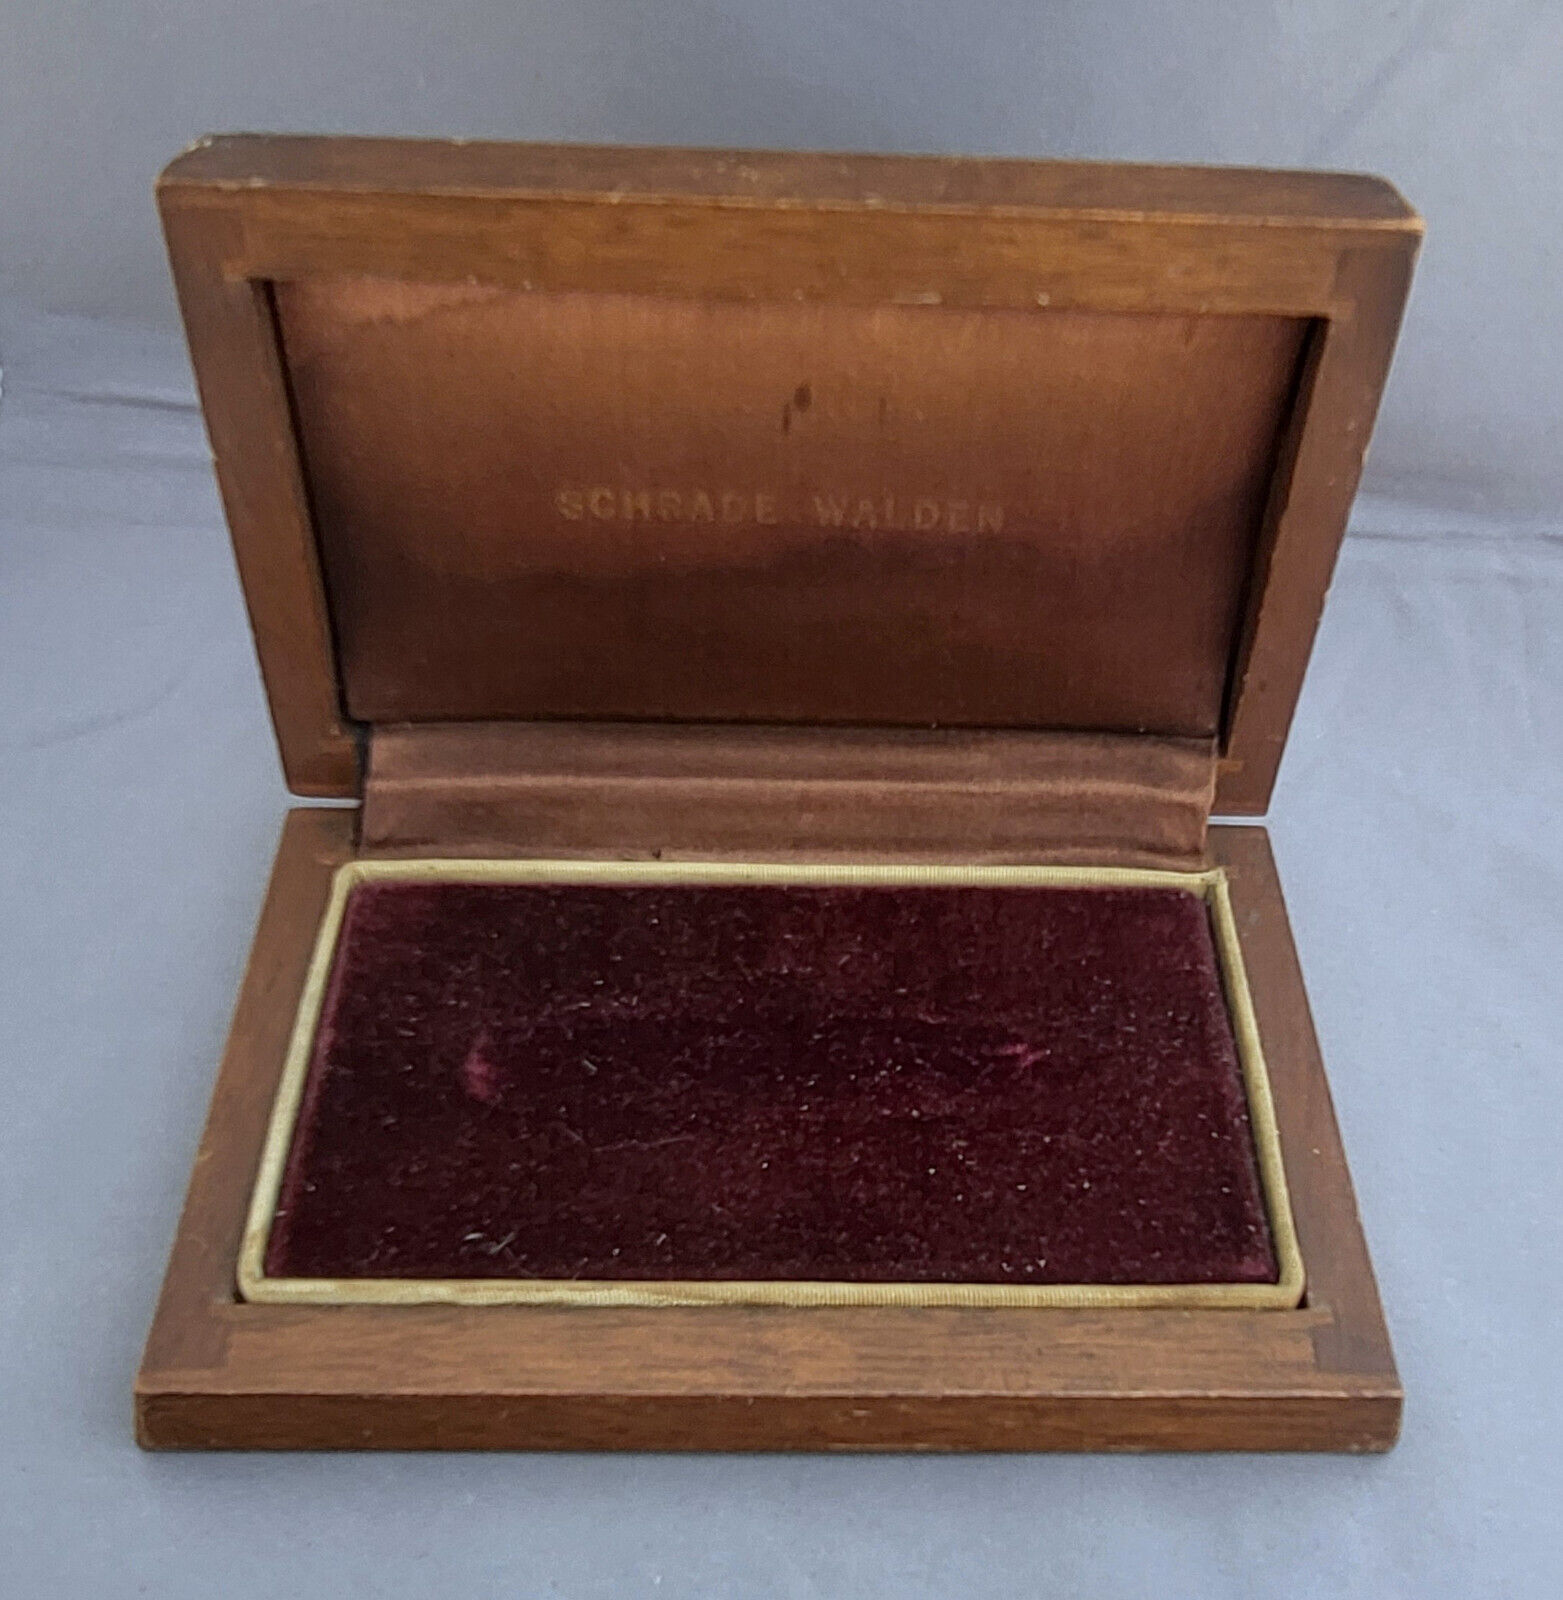 Vintage - Schrade Walden - Knife Presentation Box